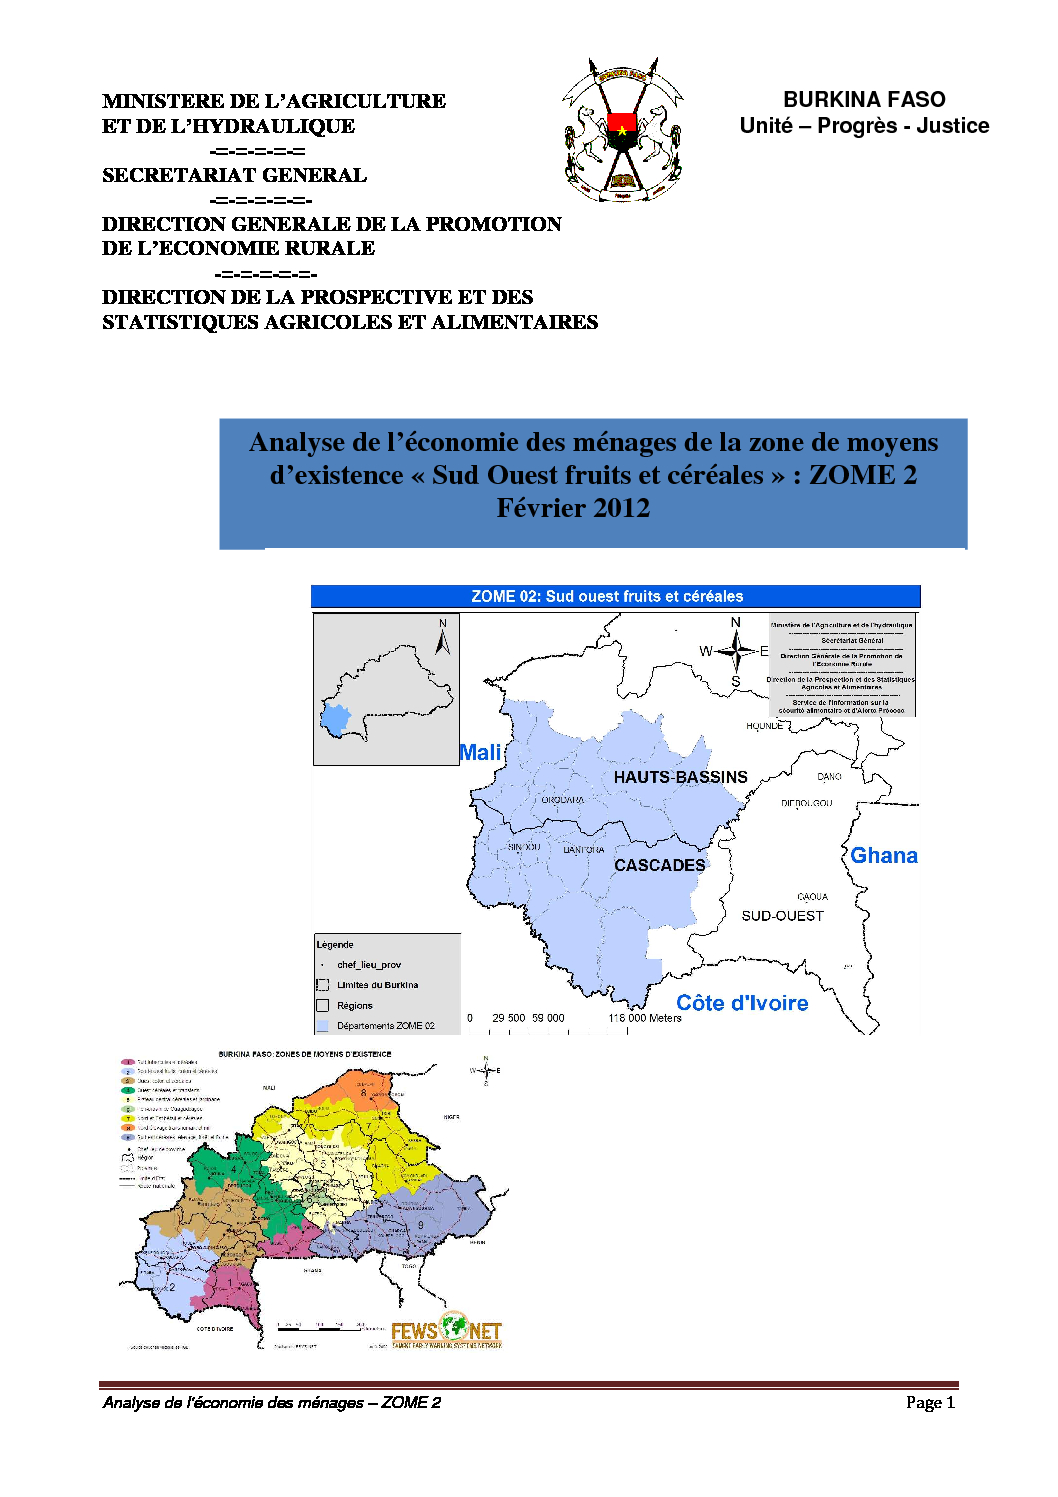 Profil Burkina Faso - ZOME 2 - Fevrier 2012